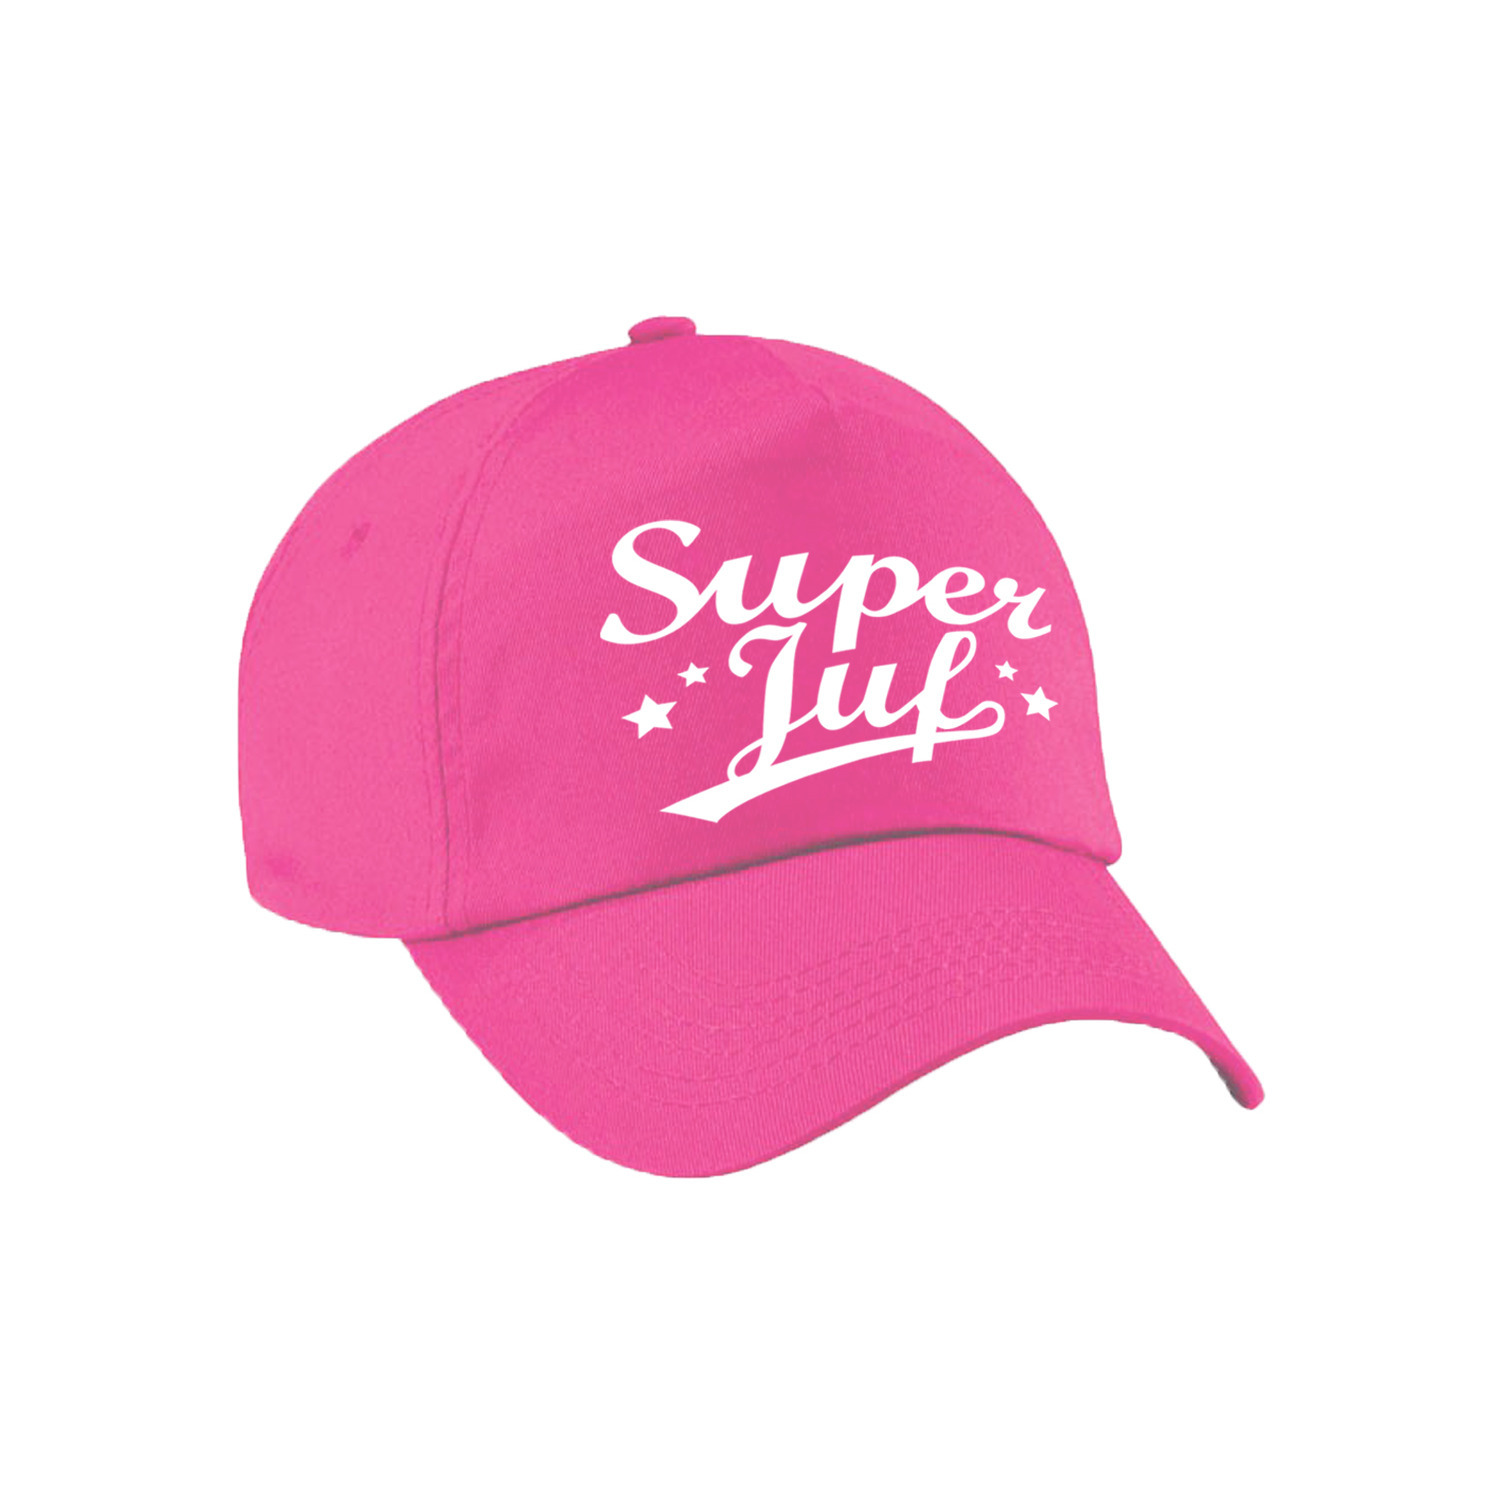 Super juf cadeau pet -cap roze voor dames